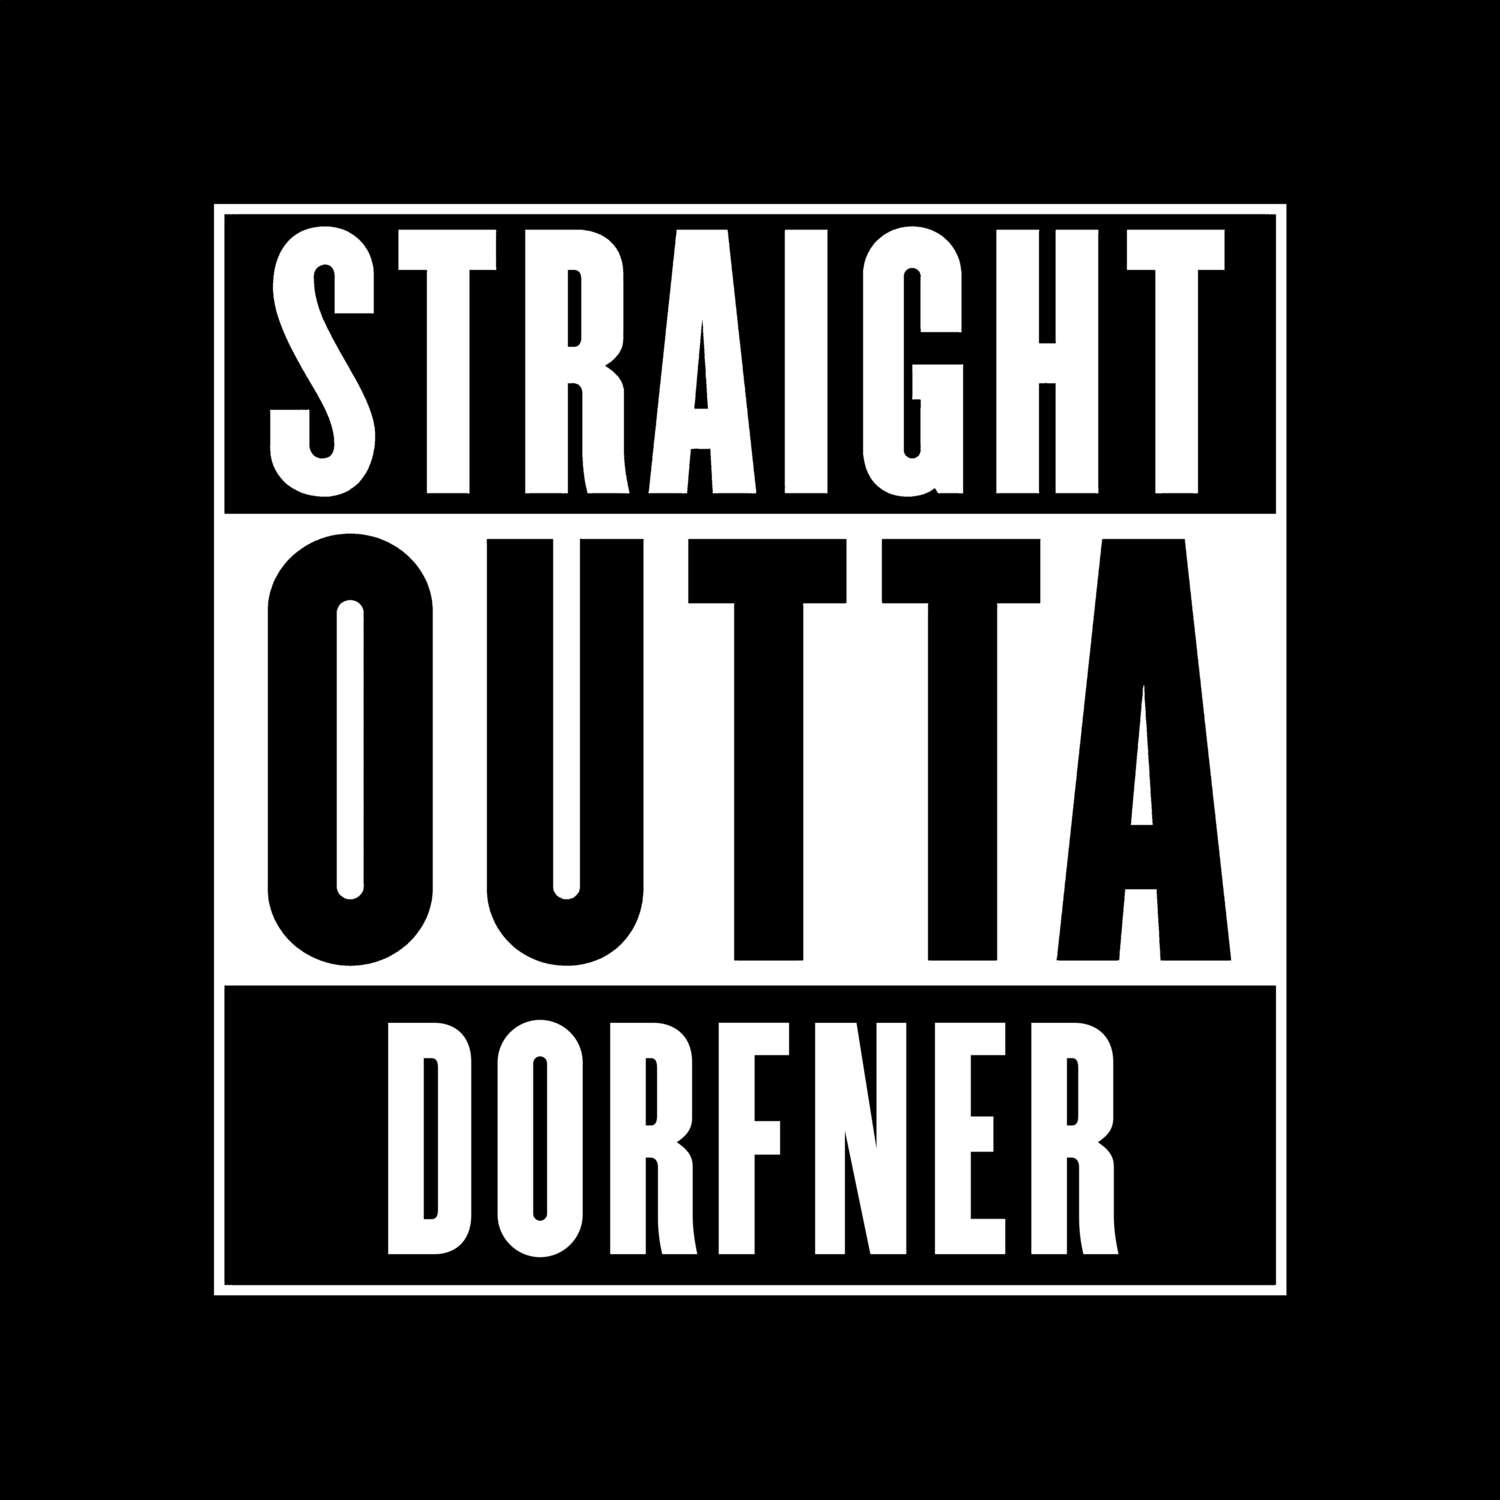 Dorfner T-Shirt »Straight Outta«